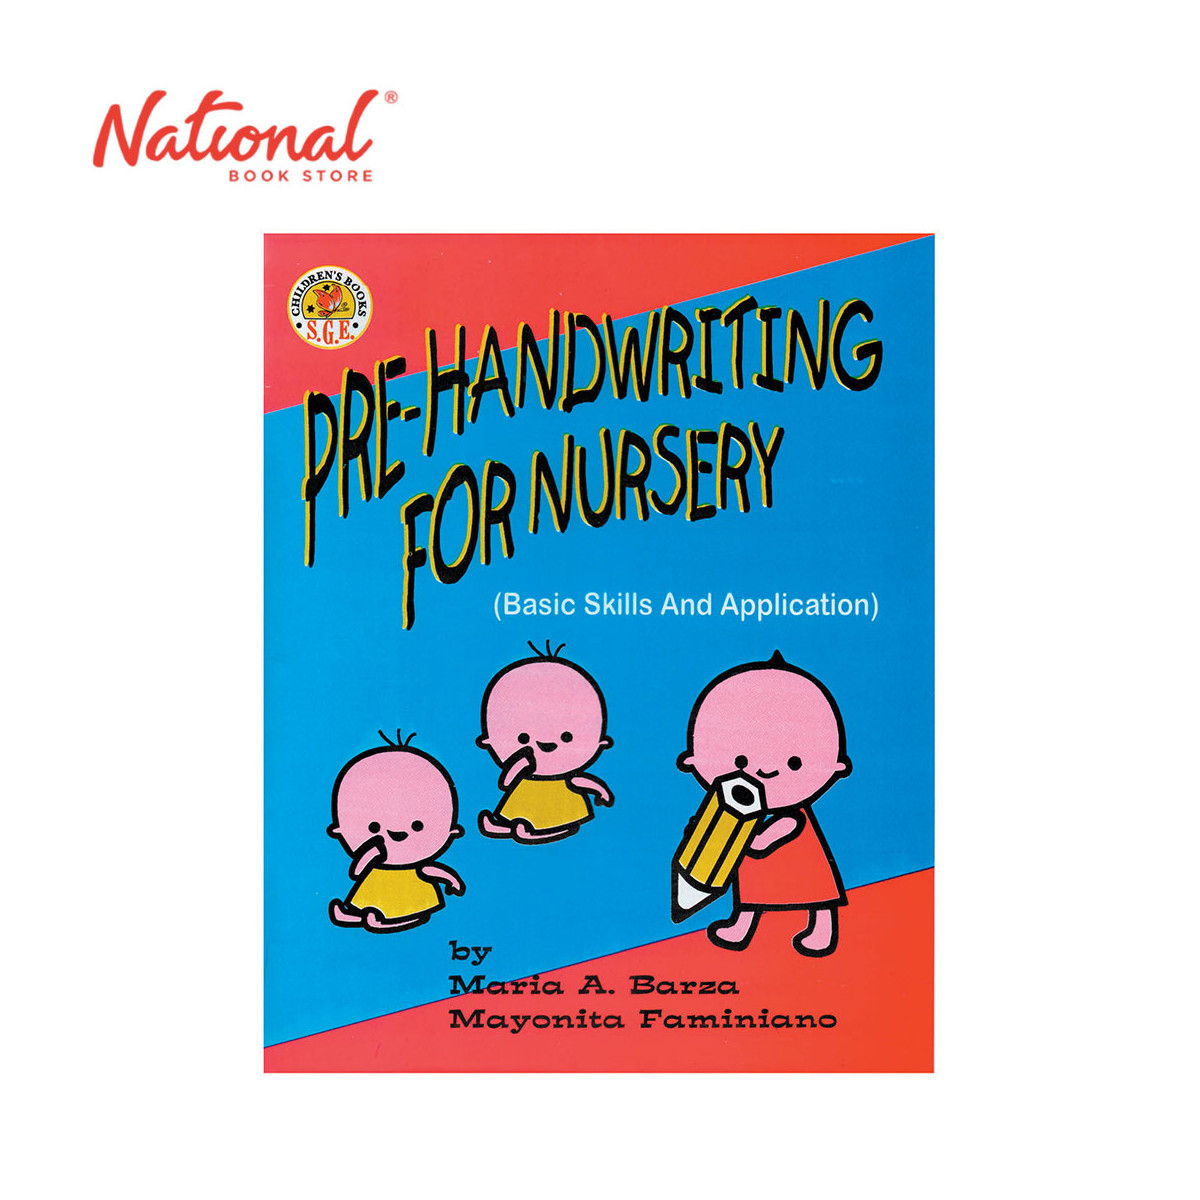 Pre-Handwriting for Nursery by Maria Barza & Mayonita Faminiano - Trade Paperback - Preschool Books